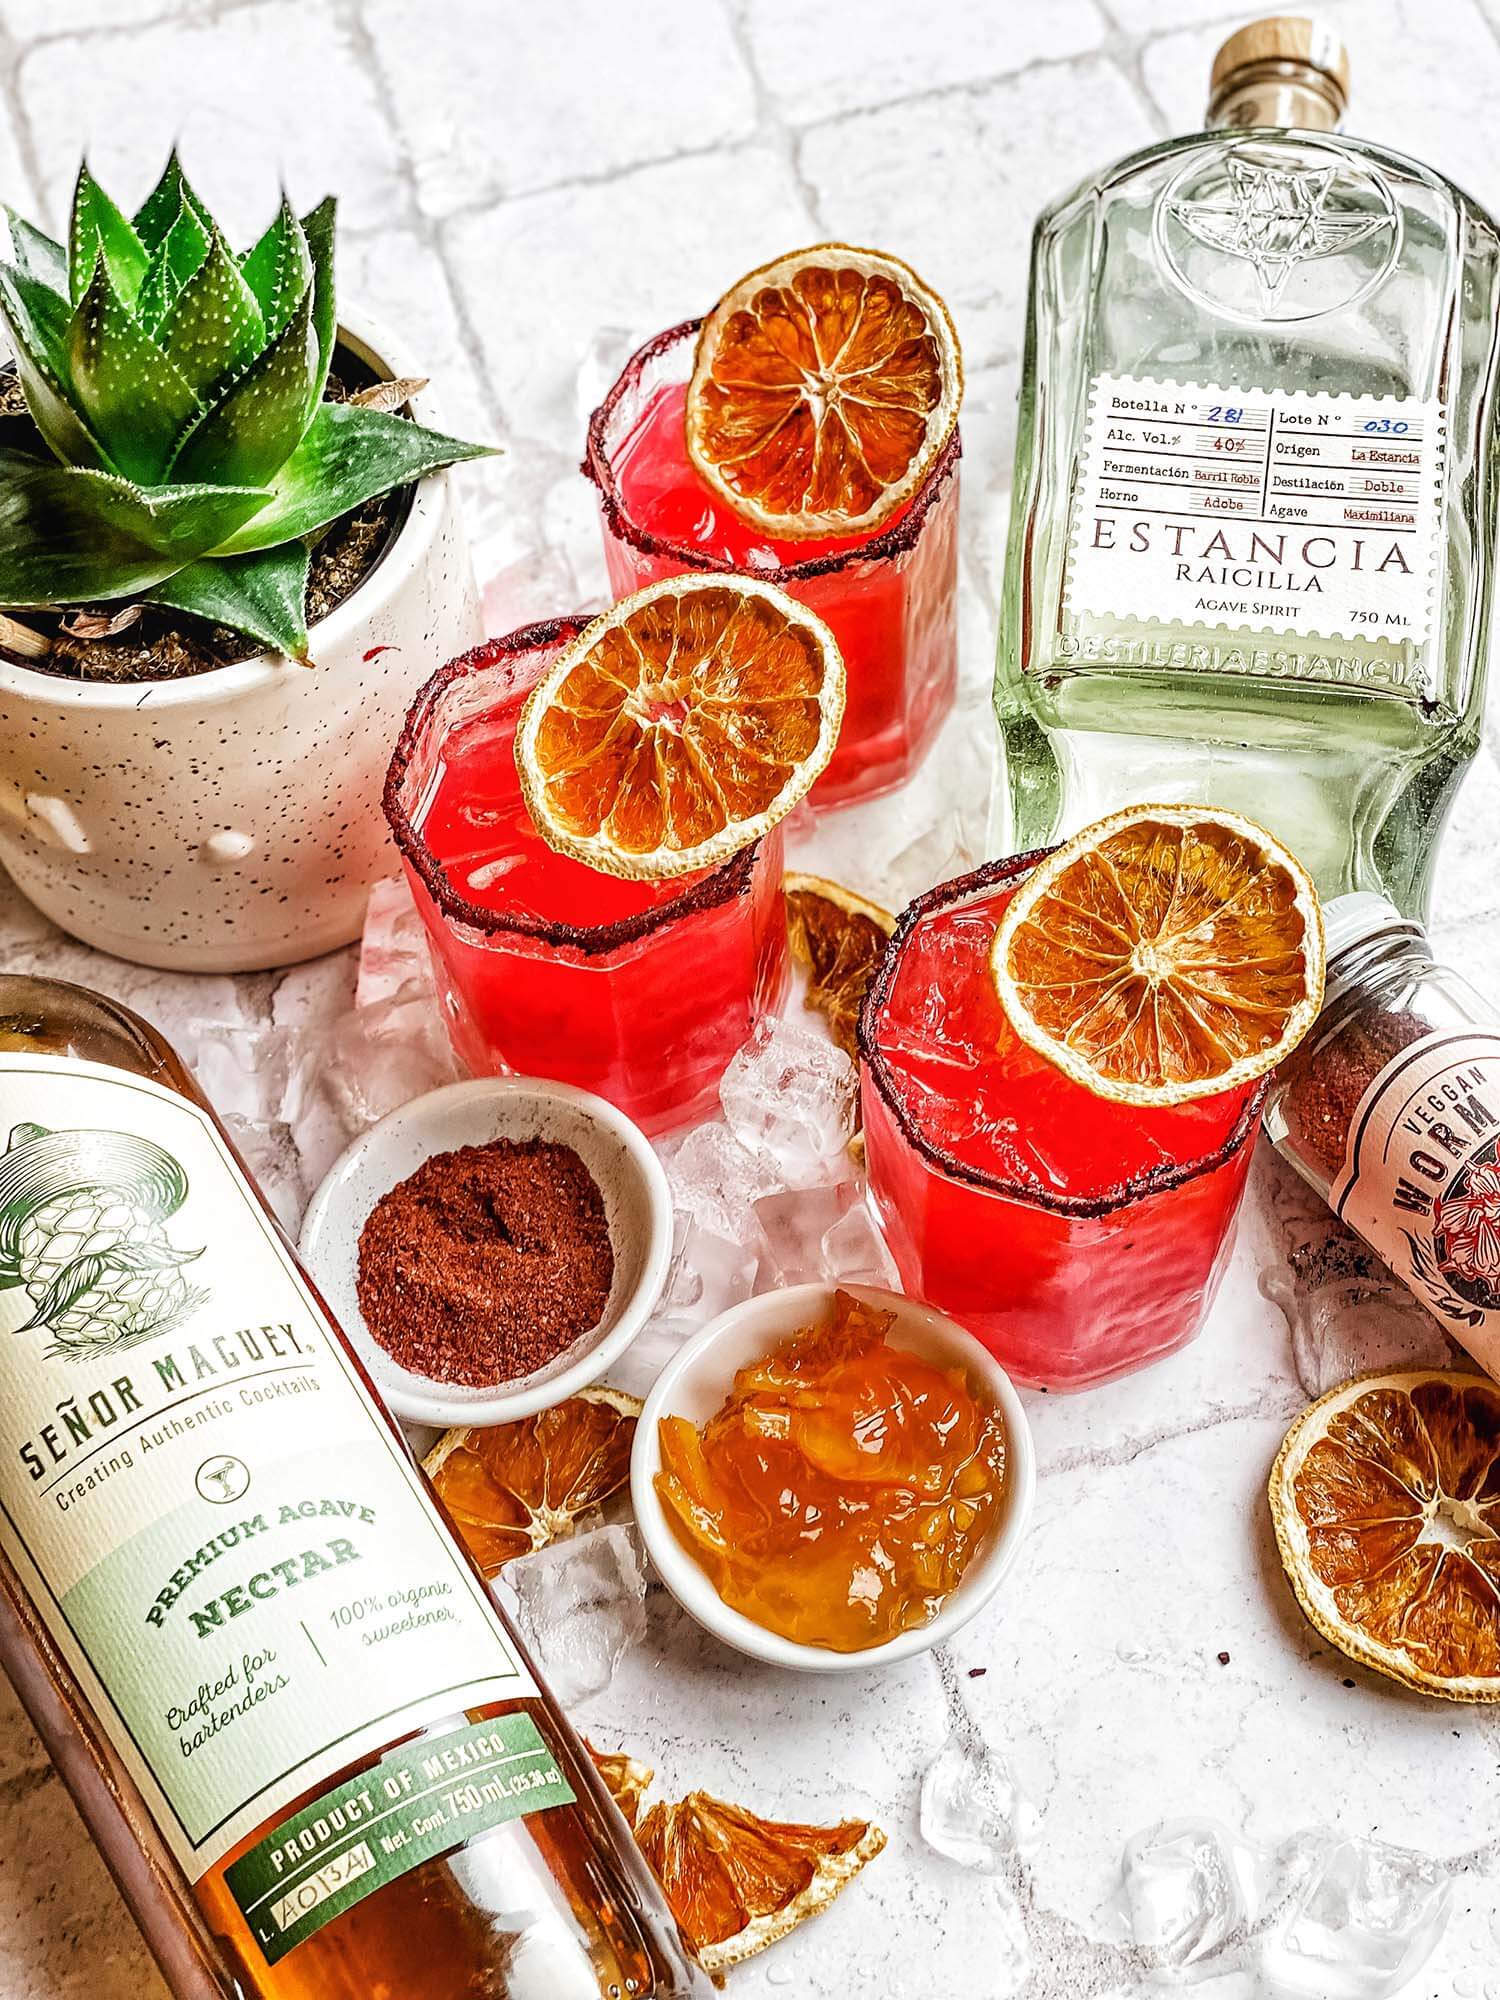 Product image for “Marmalade Raicilla Margarita Cocktail Kit”